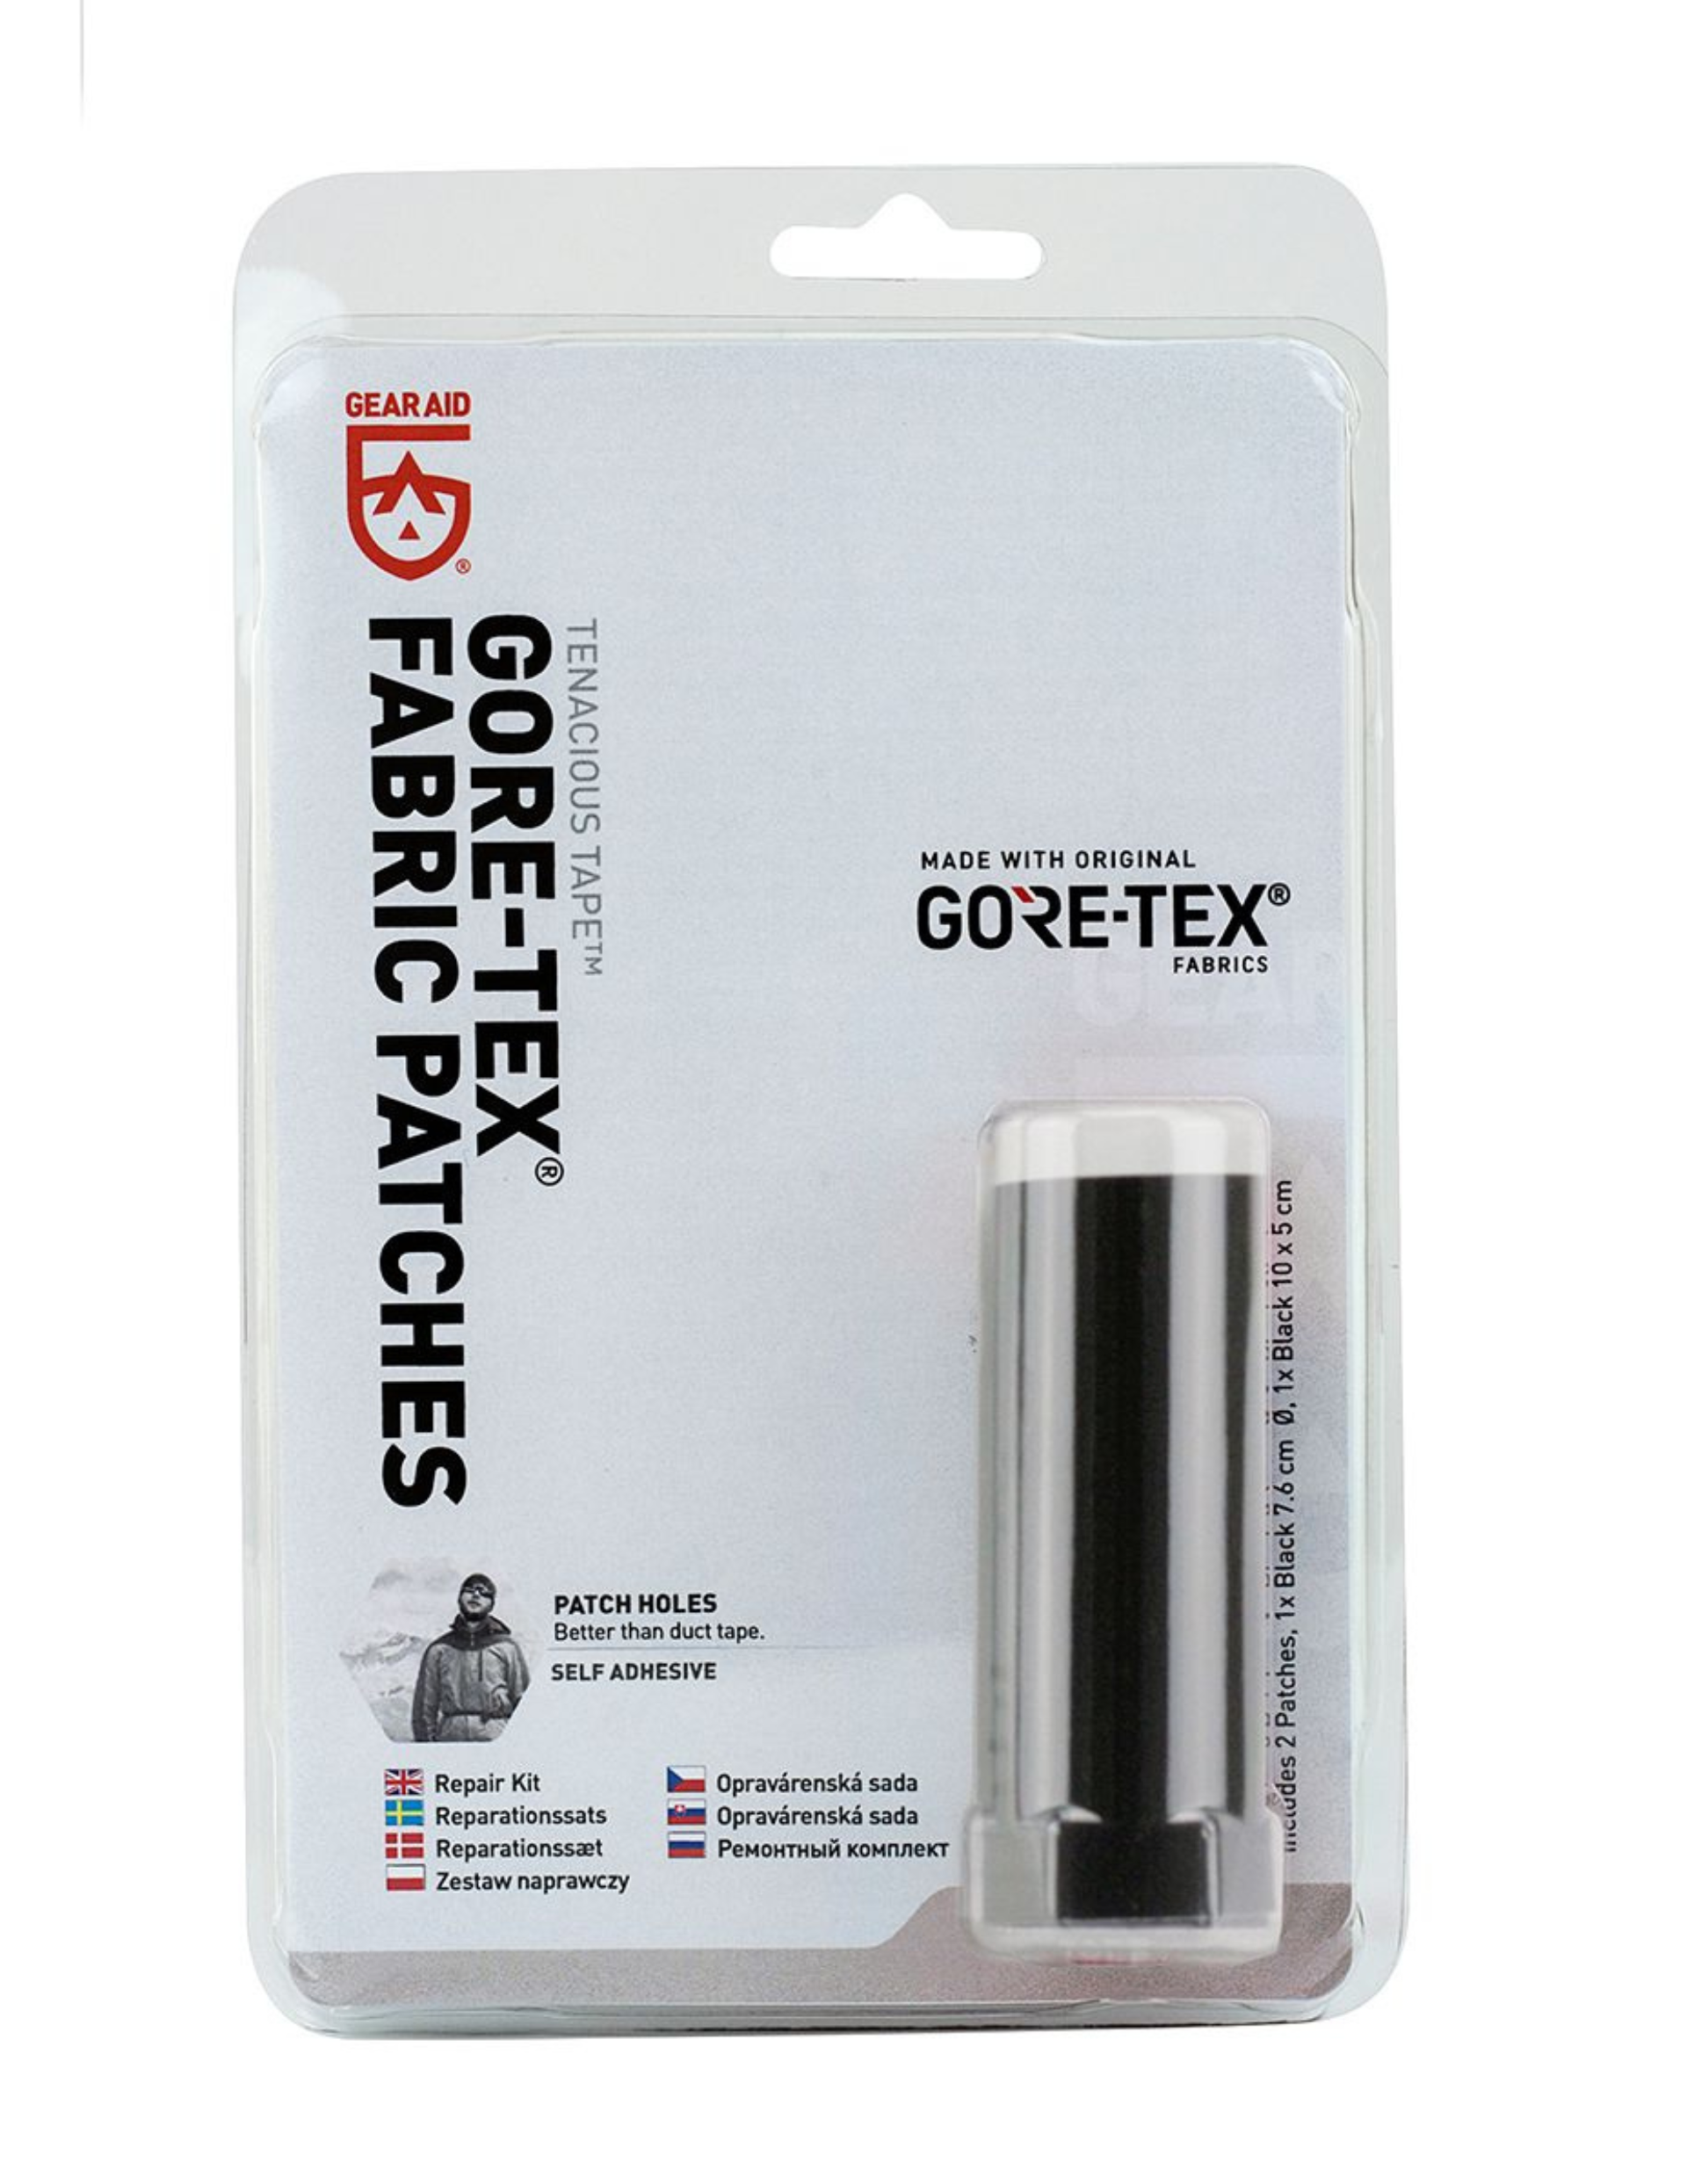 Set of 2 Gear Aid Gore-Tex Repair Patches